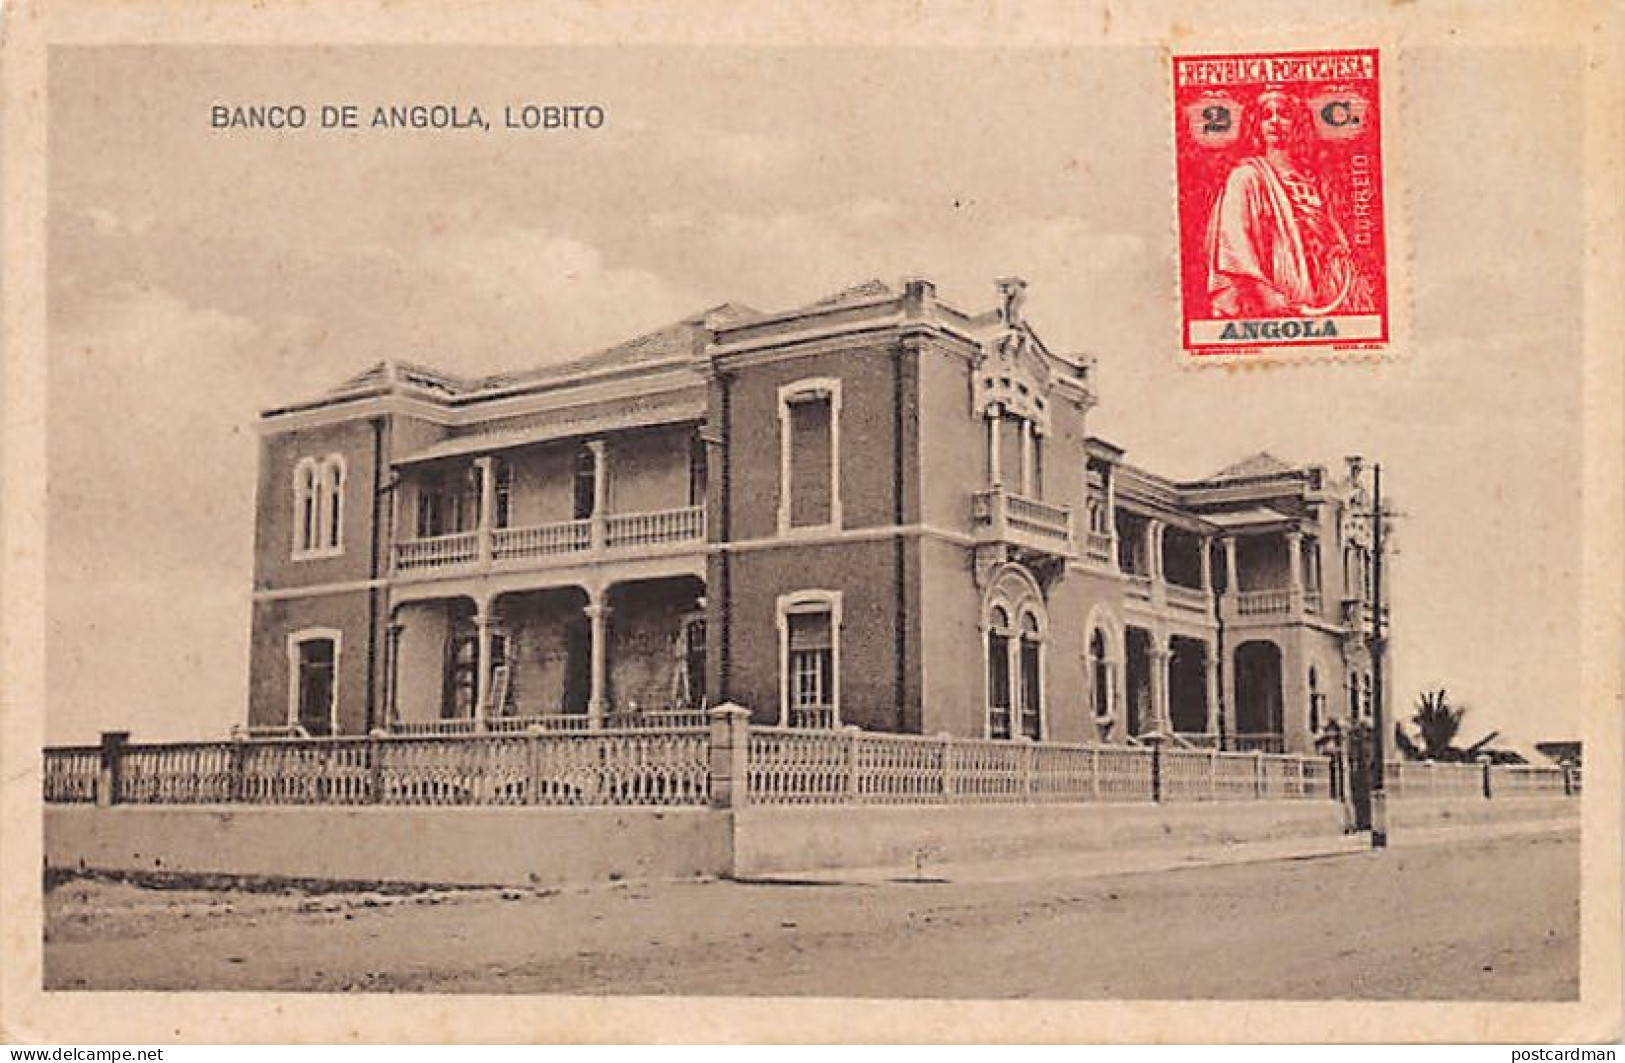 Angola - LOBITO - Banco De Angola - Bank Of Angola - Publ. Arturo Gonzalez Alonso  - Angola